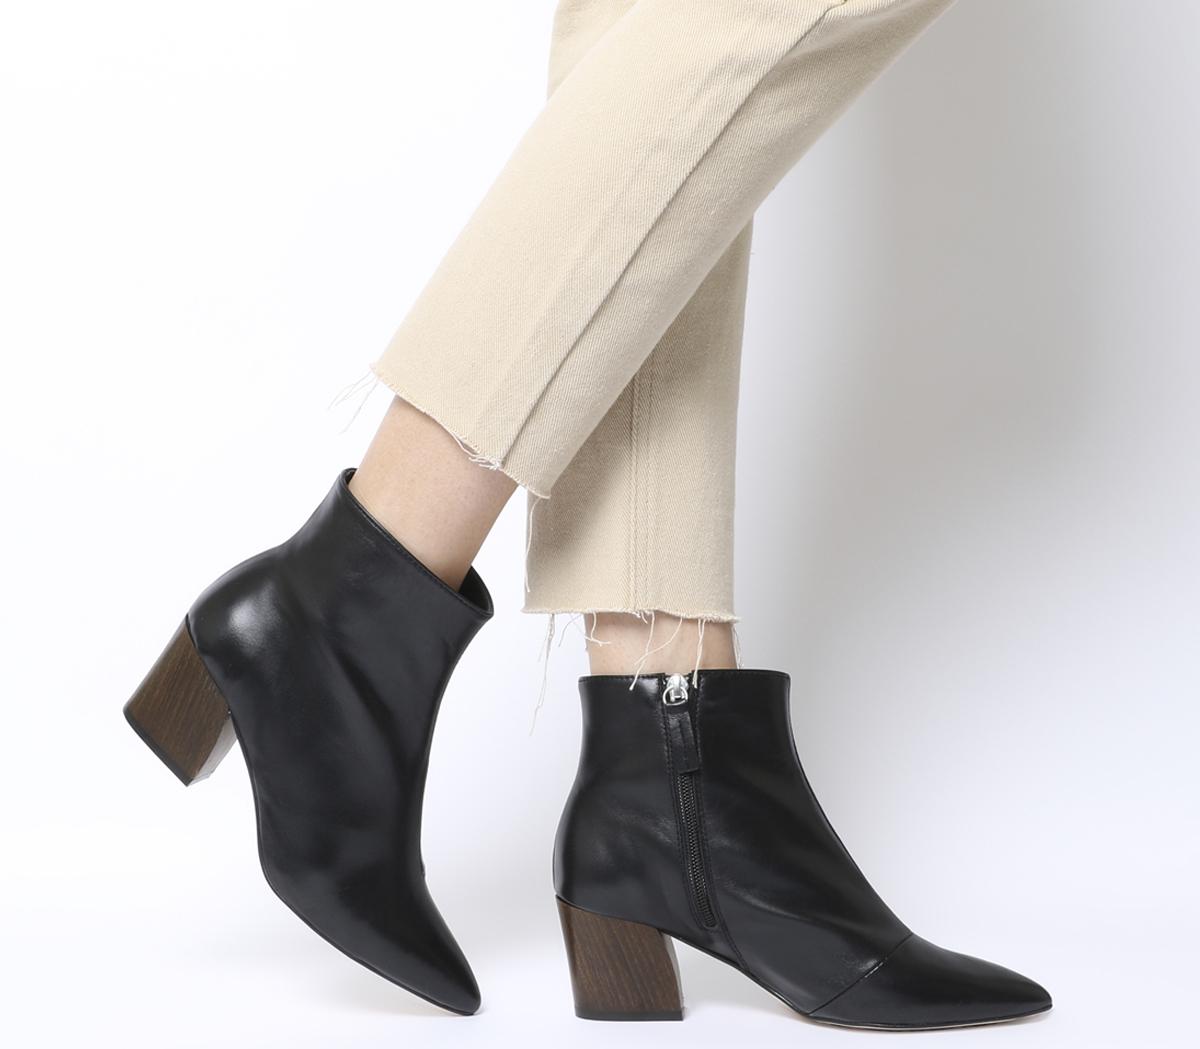 OFFICEAubergine Curved Heel Ankle BootsBlack Leather Wood Effect Heel